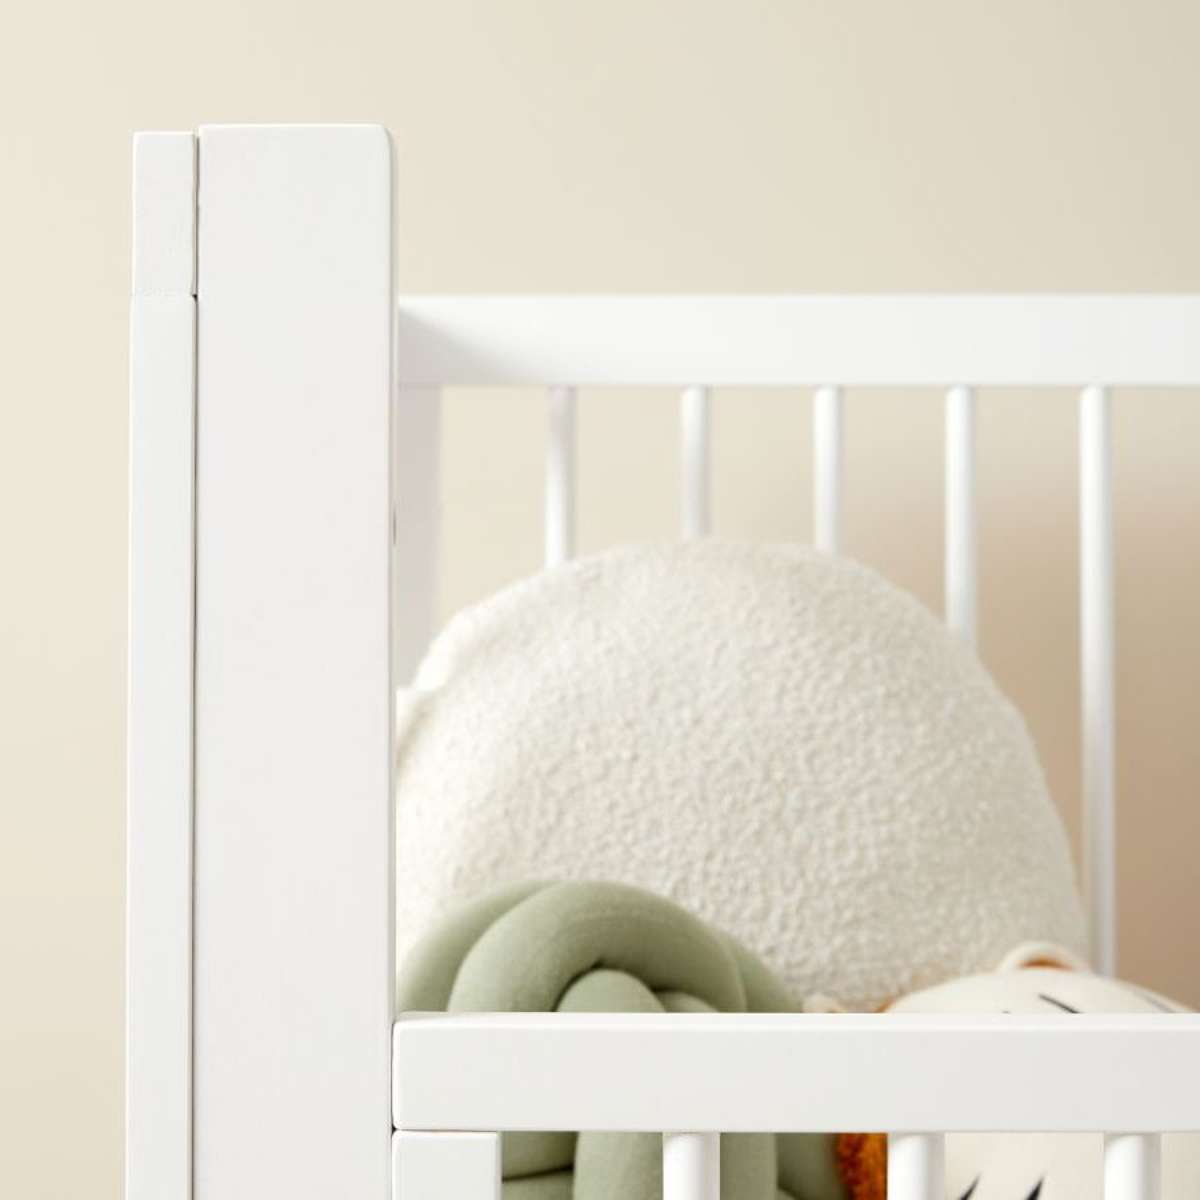 Aspen Cot Toddler Bed Half Frame - White